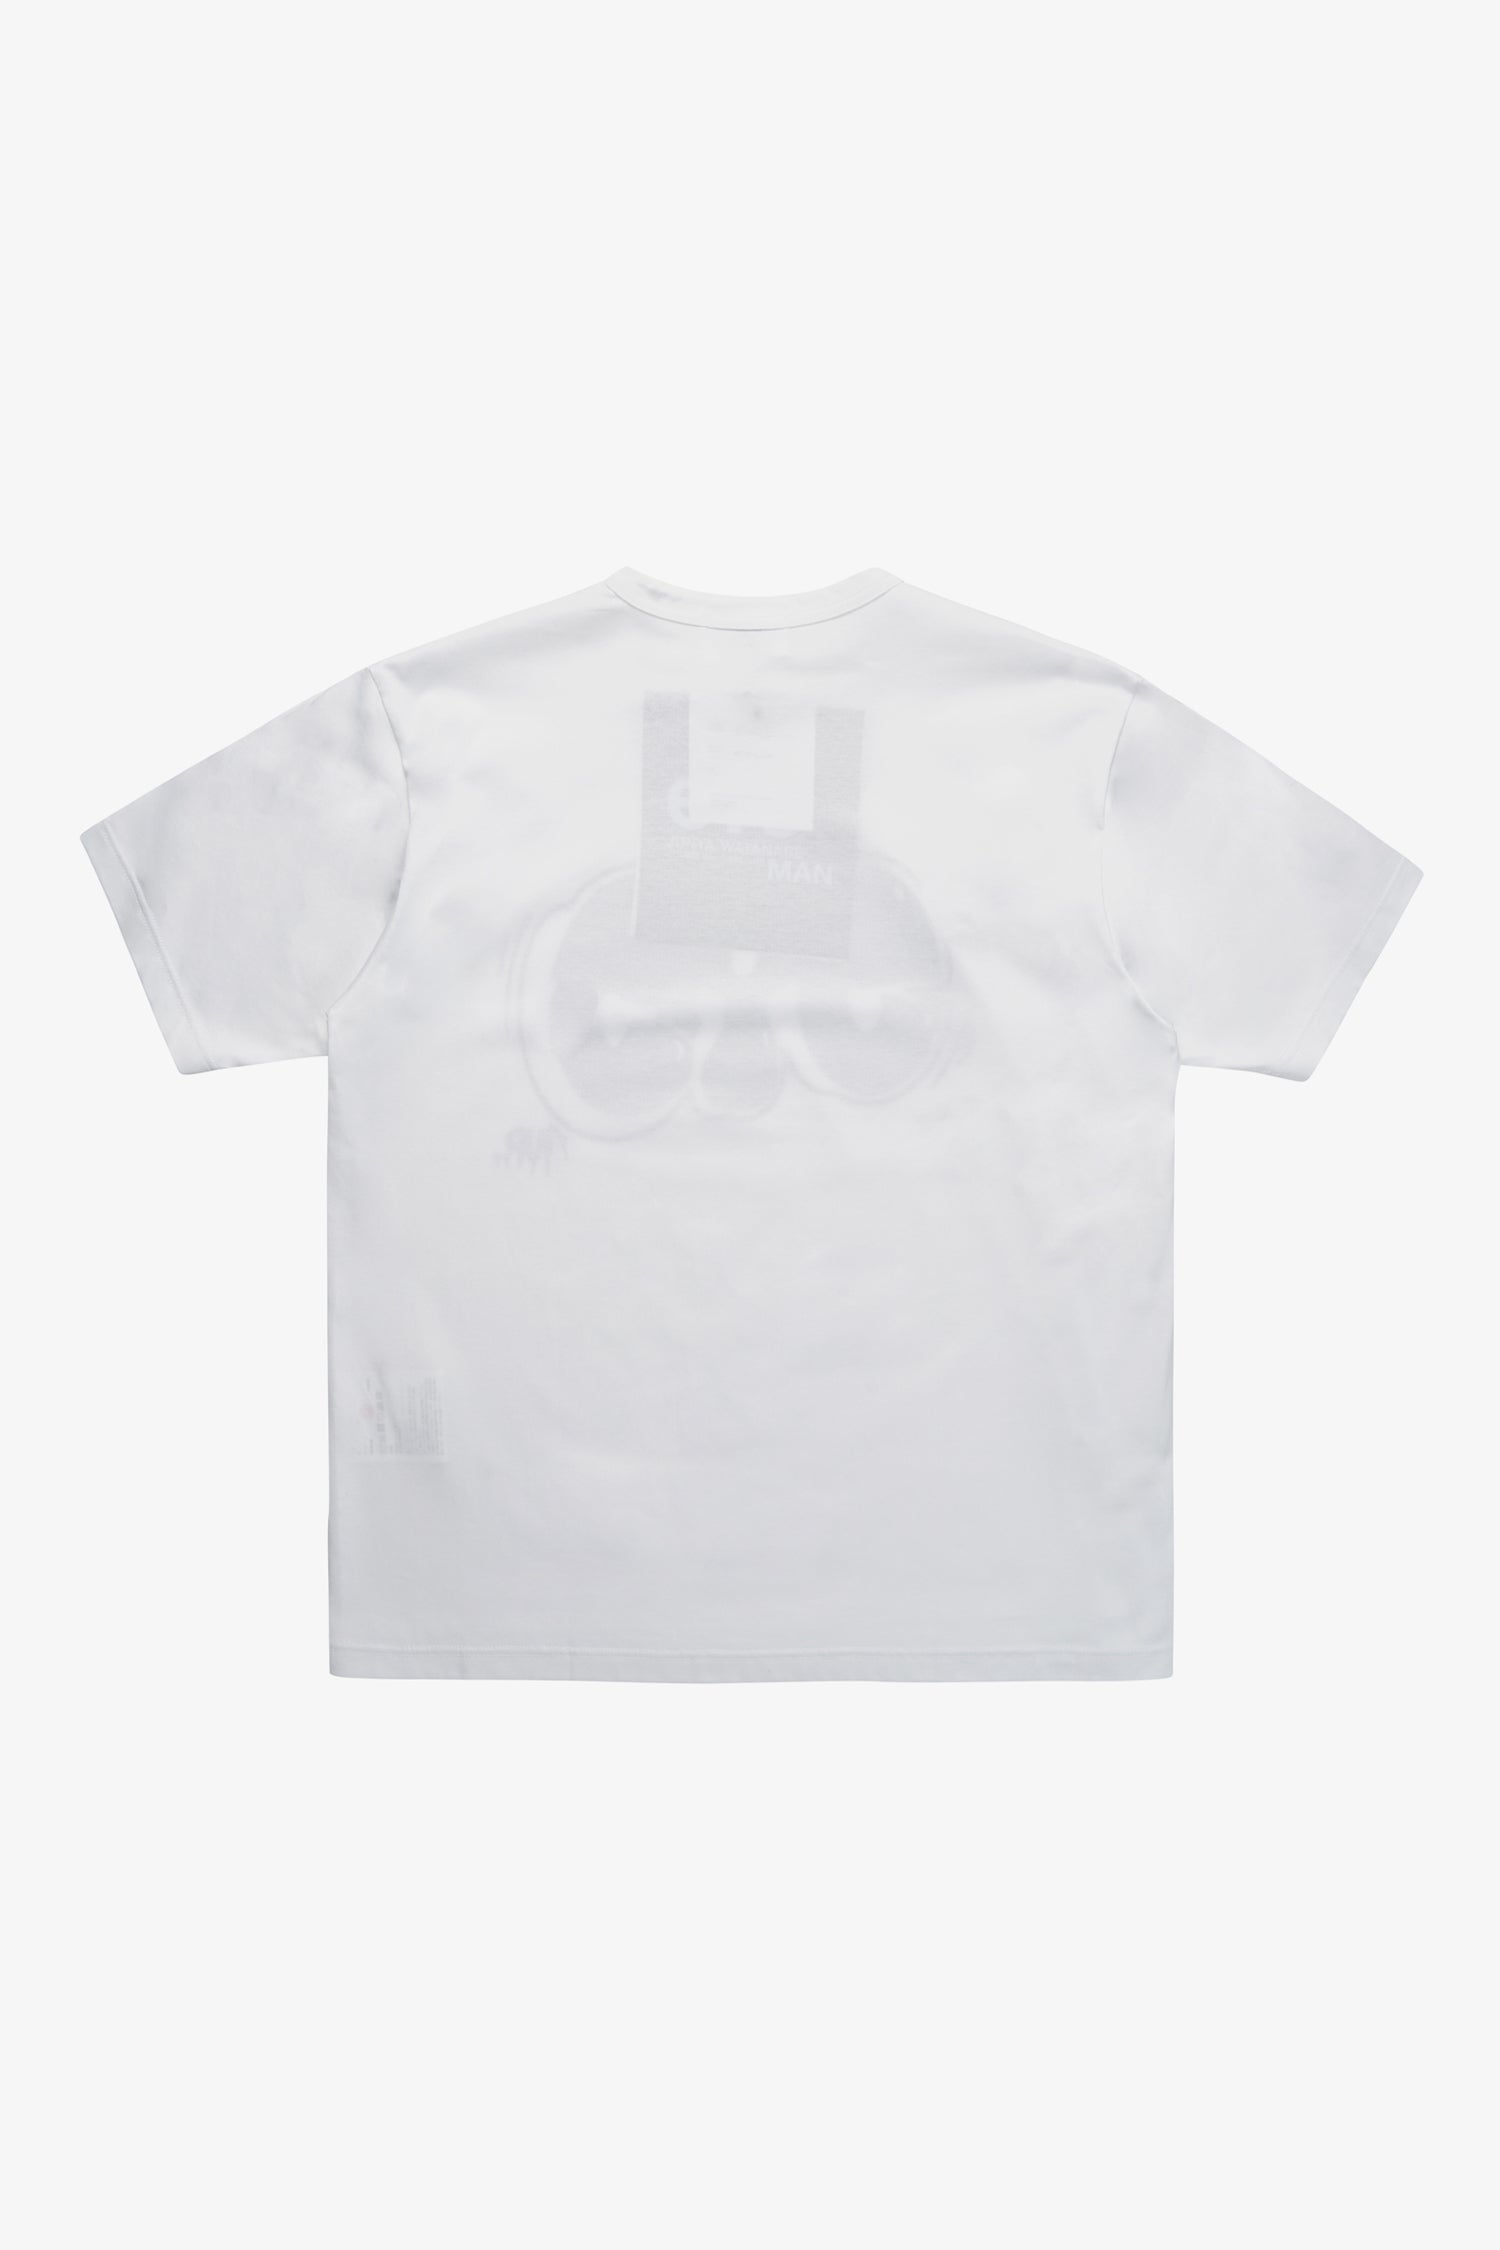 Selectshop FRAME - JUNYA WATANABE MAN EYE "1UP" T-Shirt T-Shirts Dubai